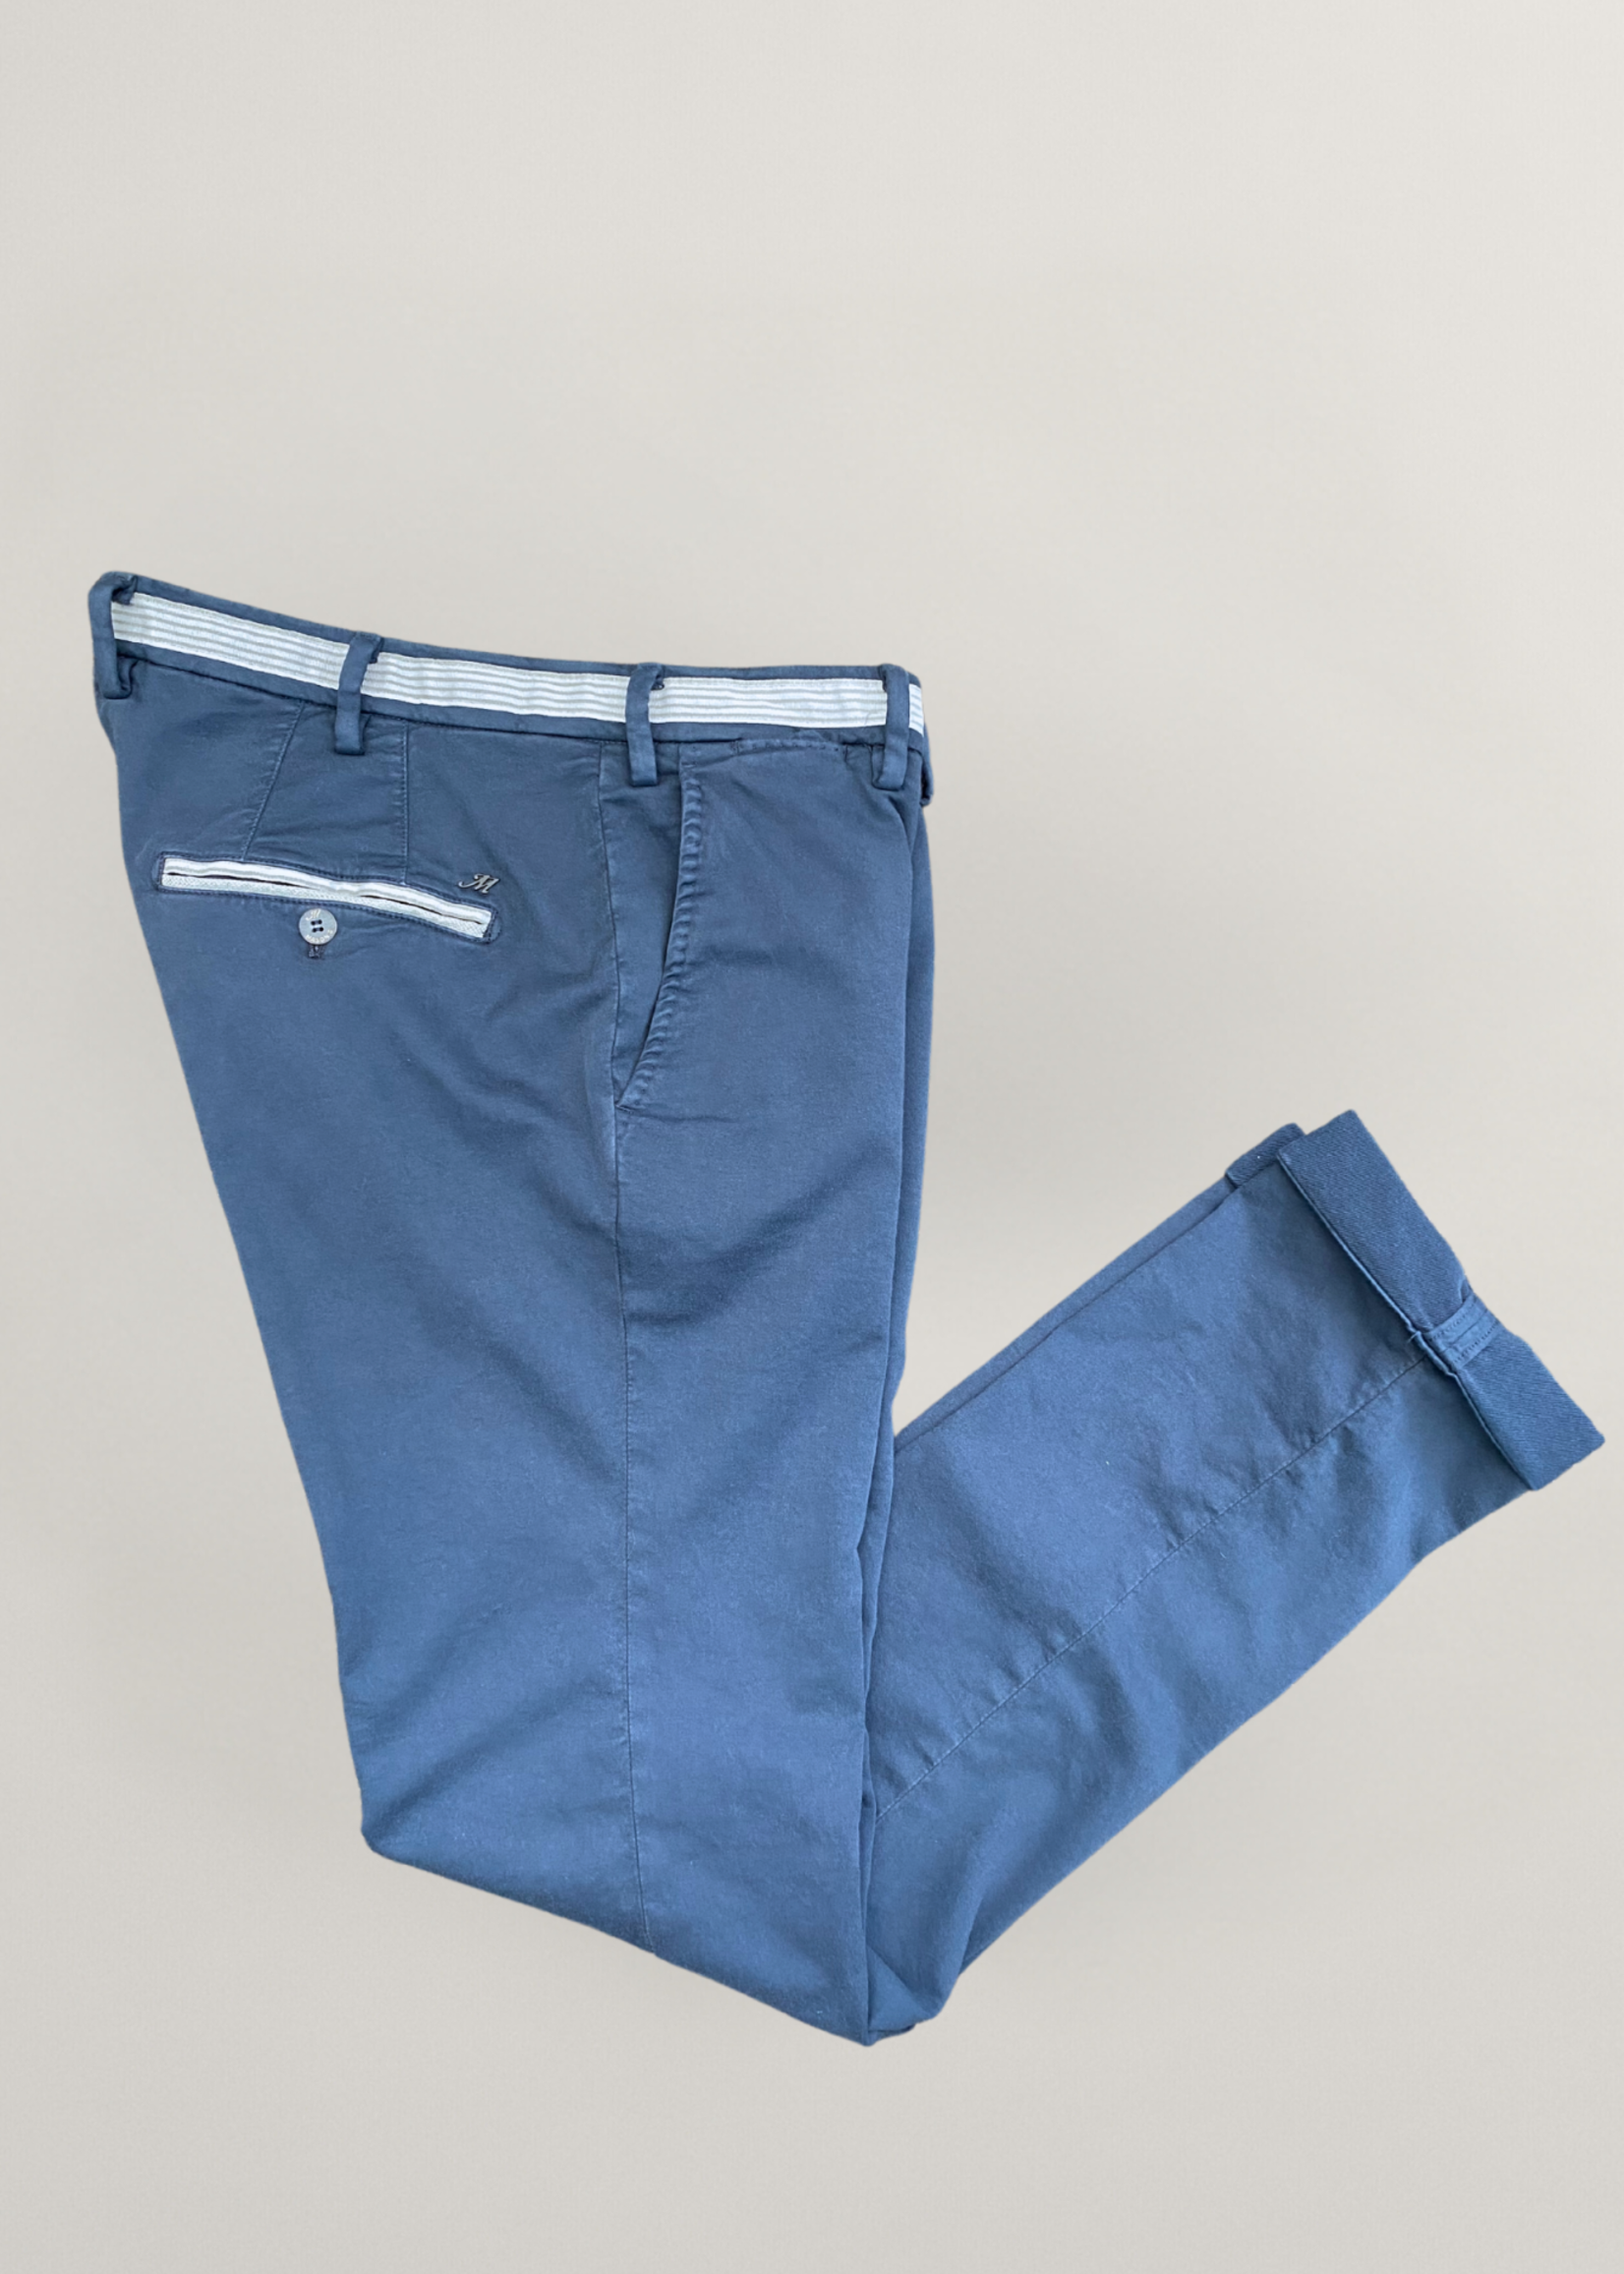 MASON'S Torino Golf pantalon chino jogger homme en jersey stretch slim - Bleu marine